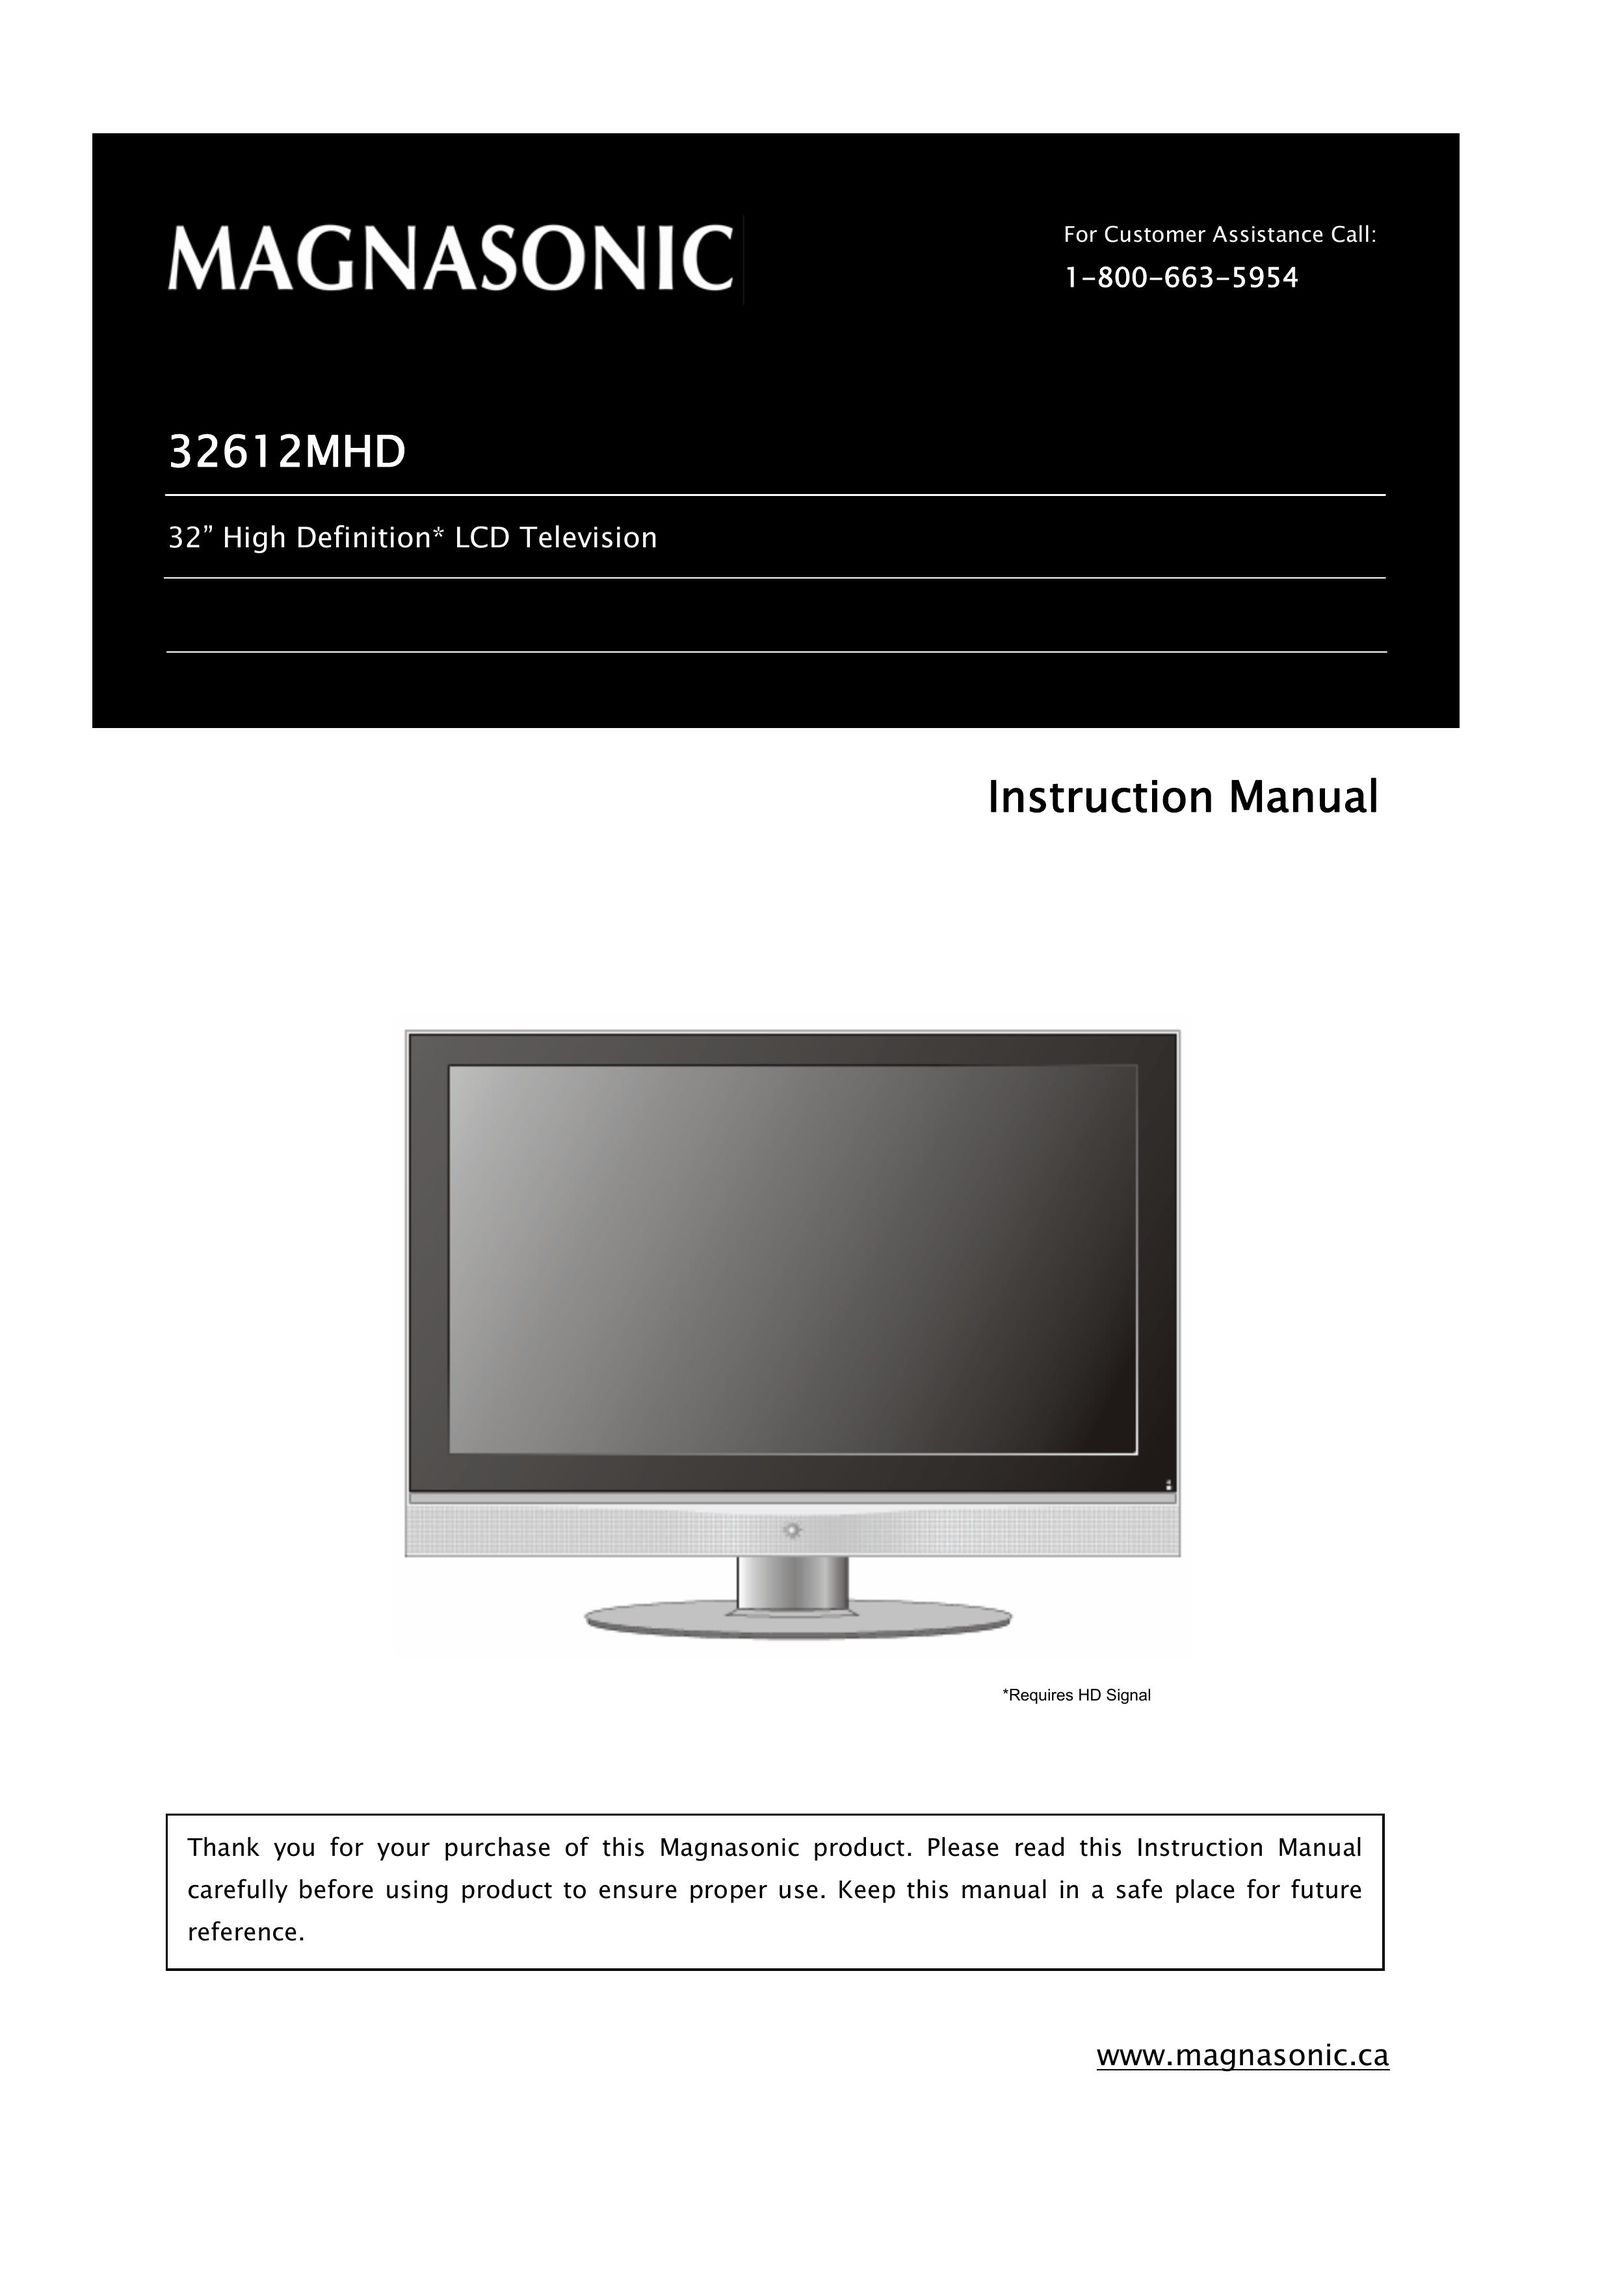 Magnasonic 32612MHD Flat Panel Television User Manual